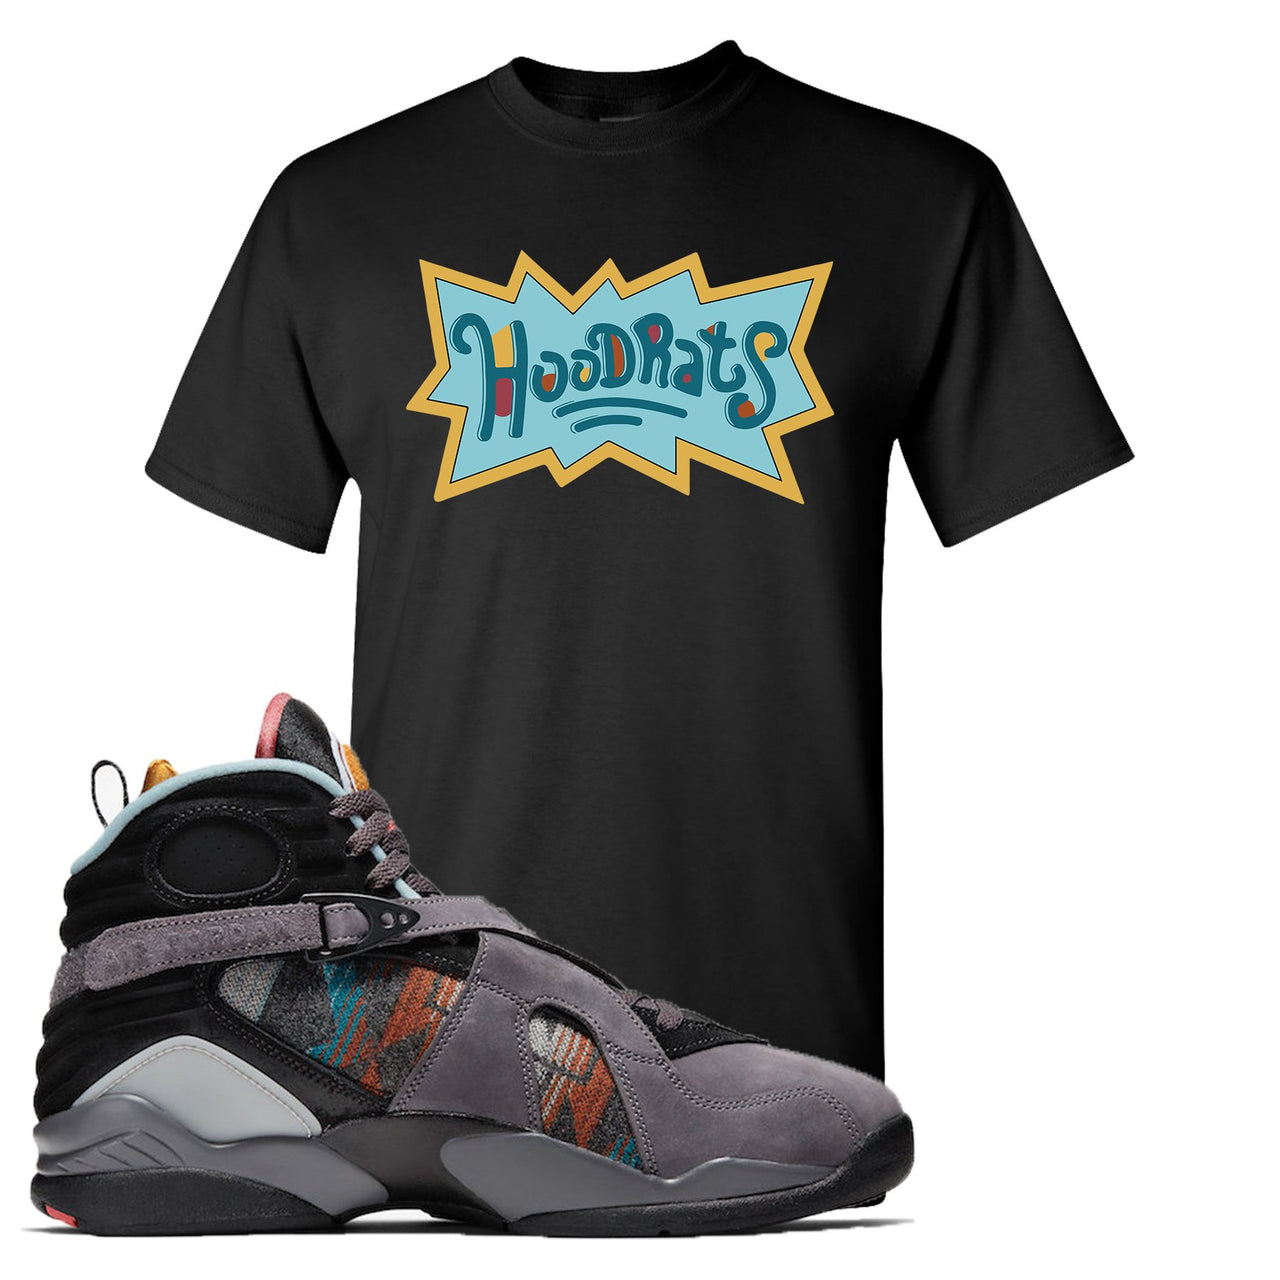 Jordan 8 N7 Pendleton Hood Rats Black Sneaker Hook Up T-Shirt